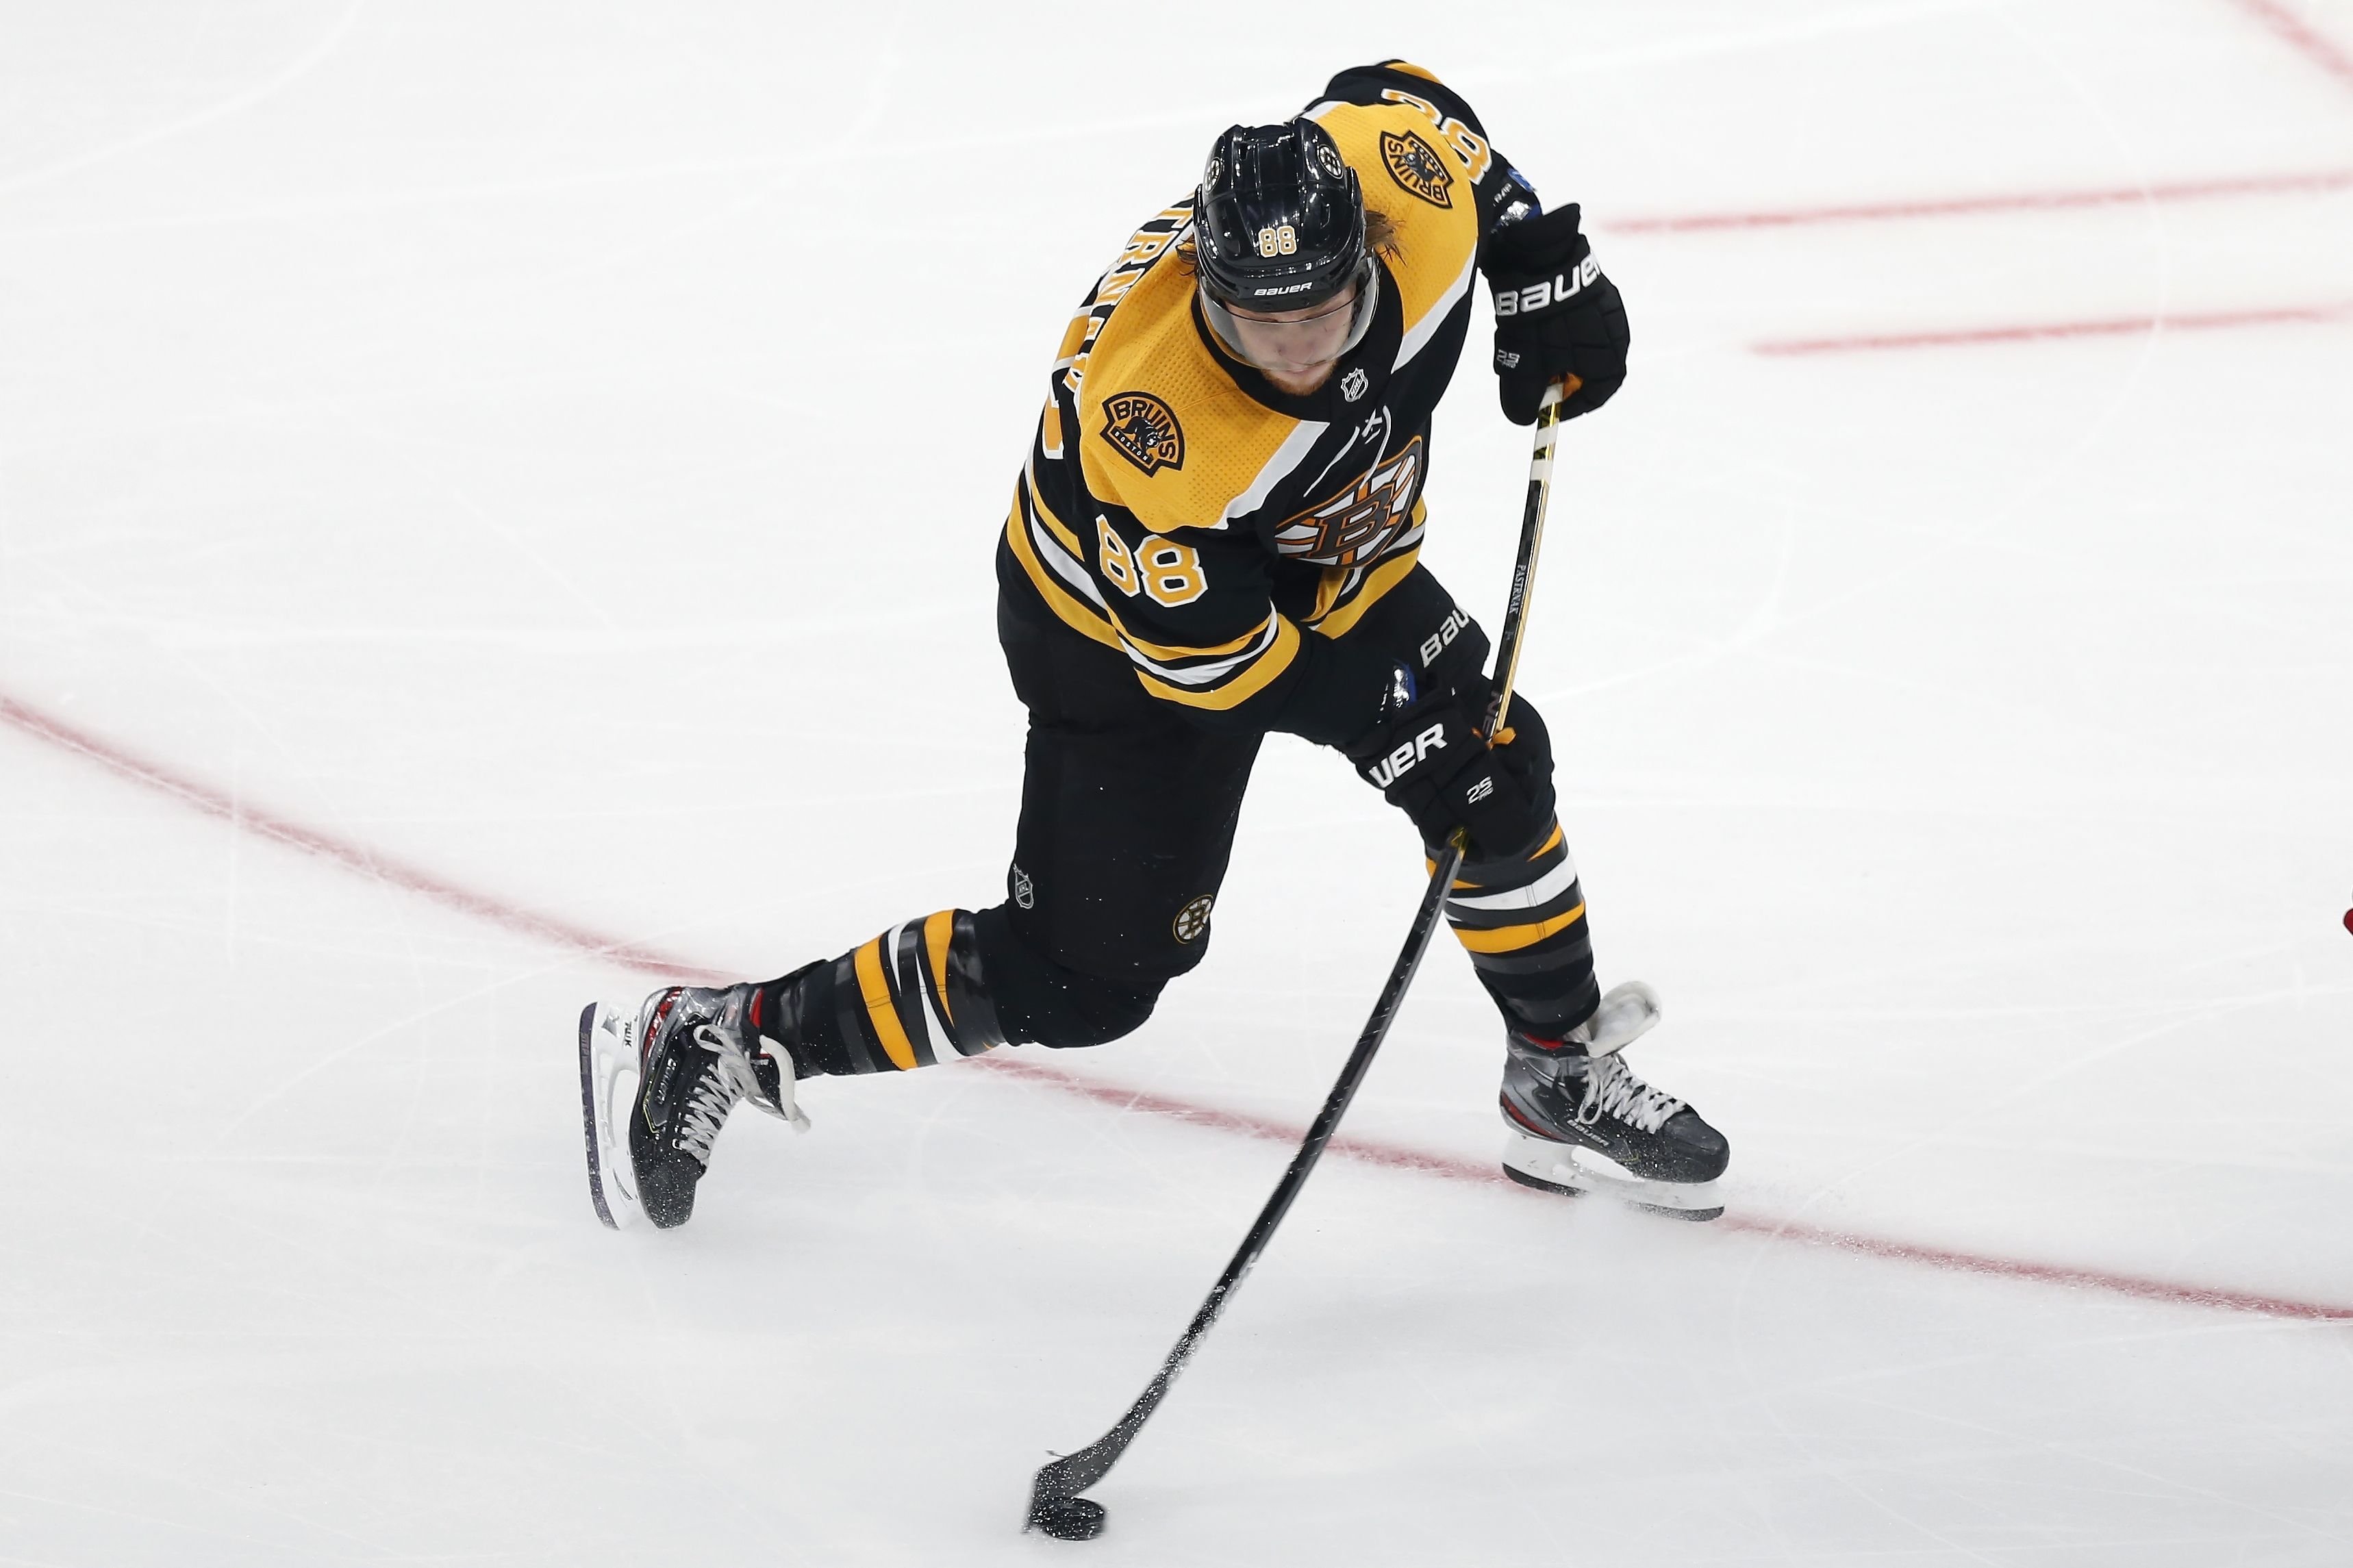 NHL SportsPicks Boston Bruins David Pastrnak 7-Inch Scale Posed